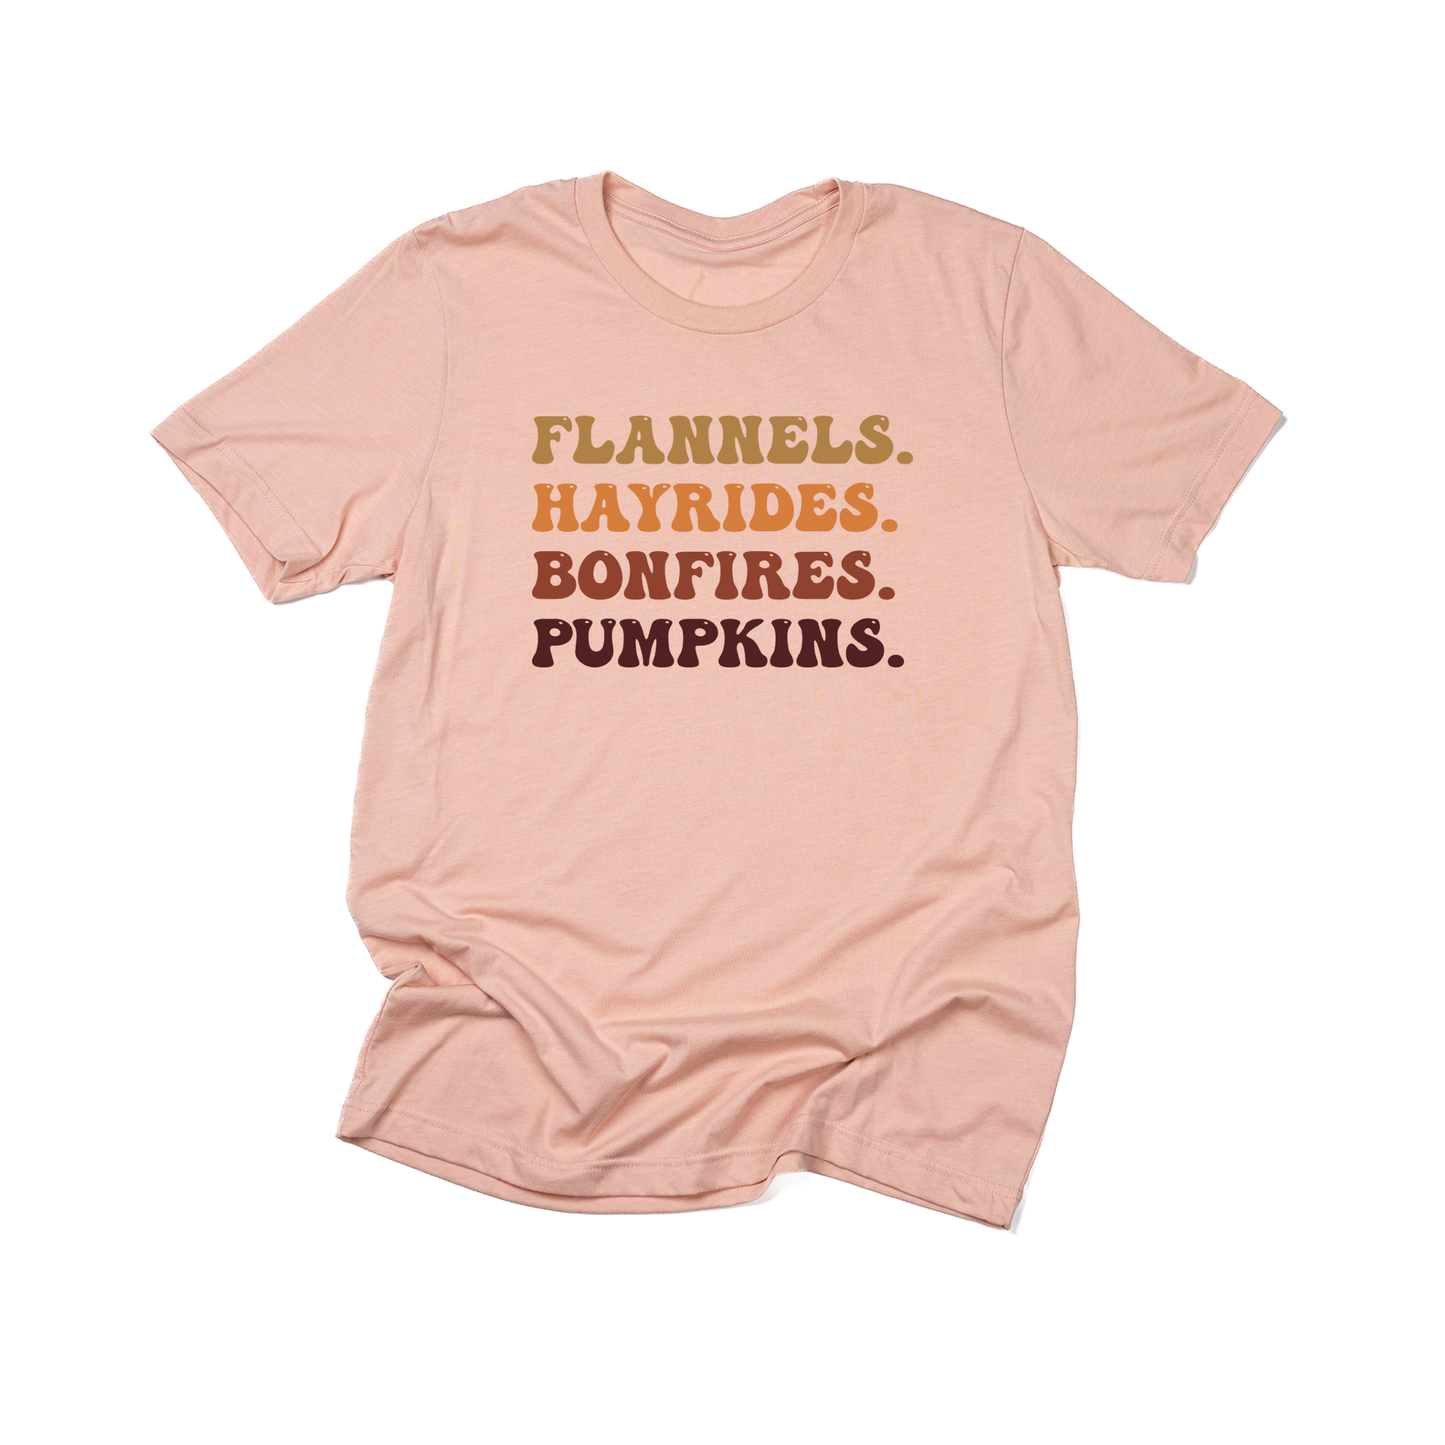 Flannels, Hayrides, Bonfires, Pumpkins - Tee (Peach)